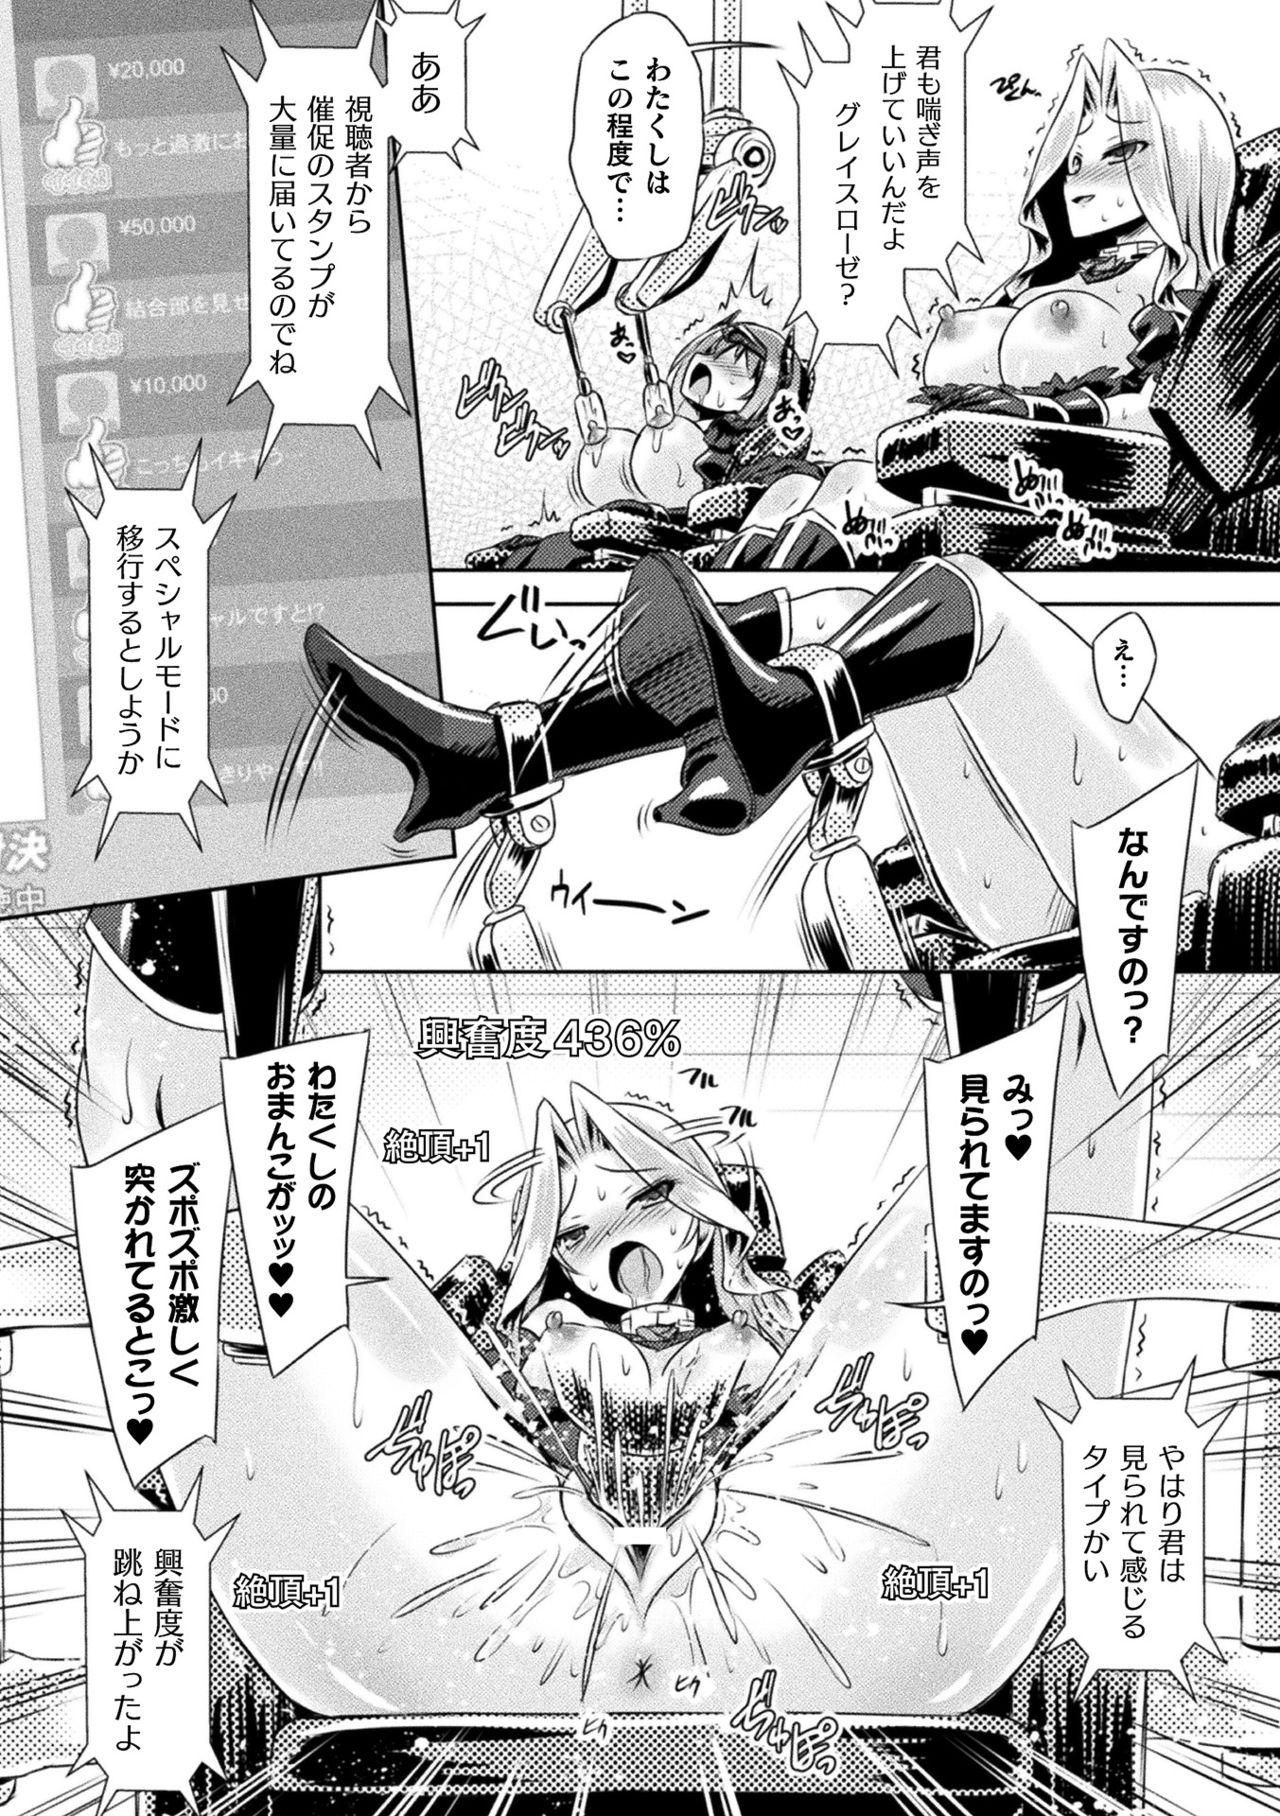 2D Comic Magazine Zecchou Kairaku ga Tomaranai Ero-Trap Dungeon Vol. 4 45